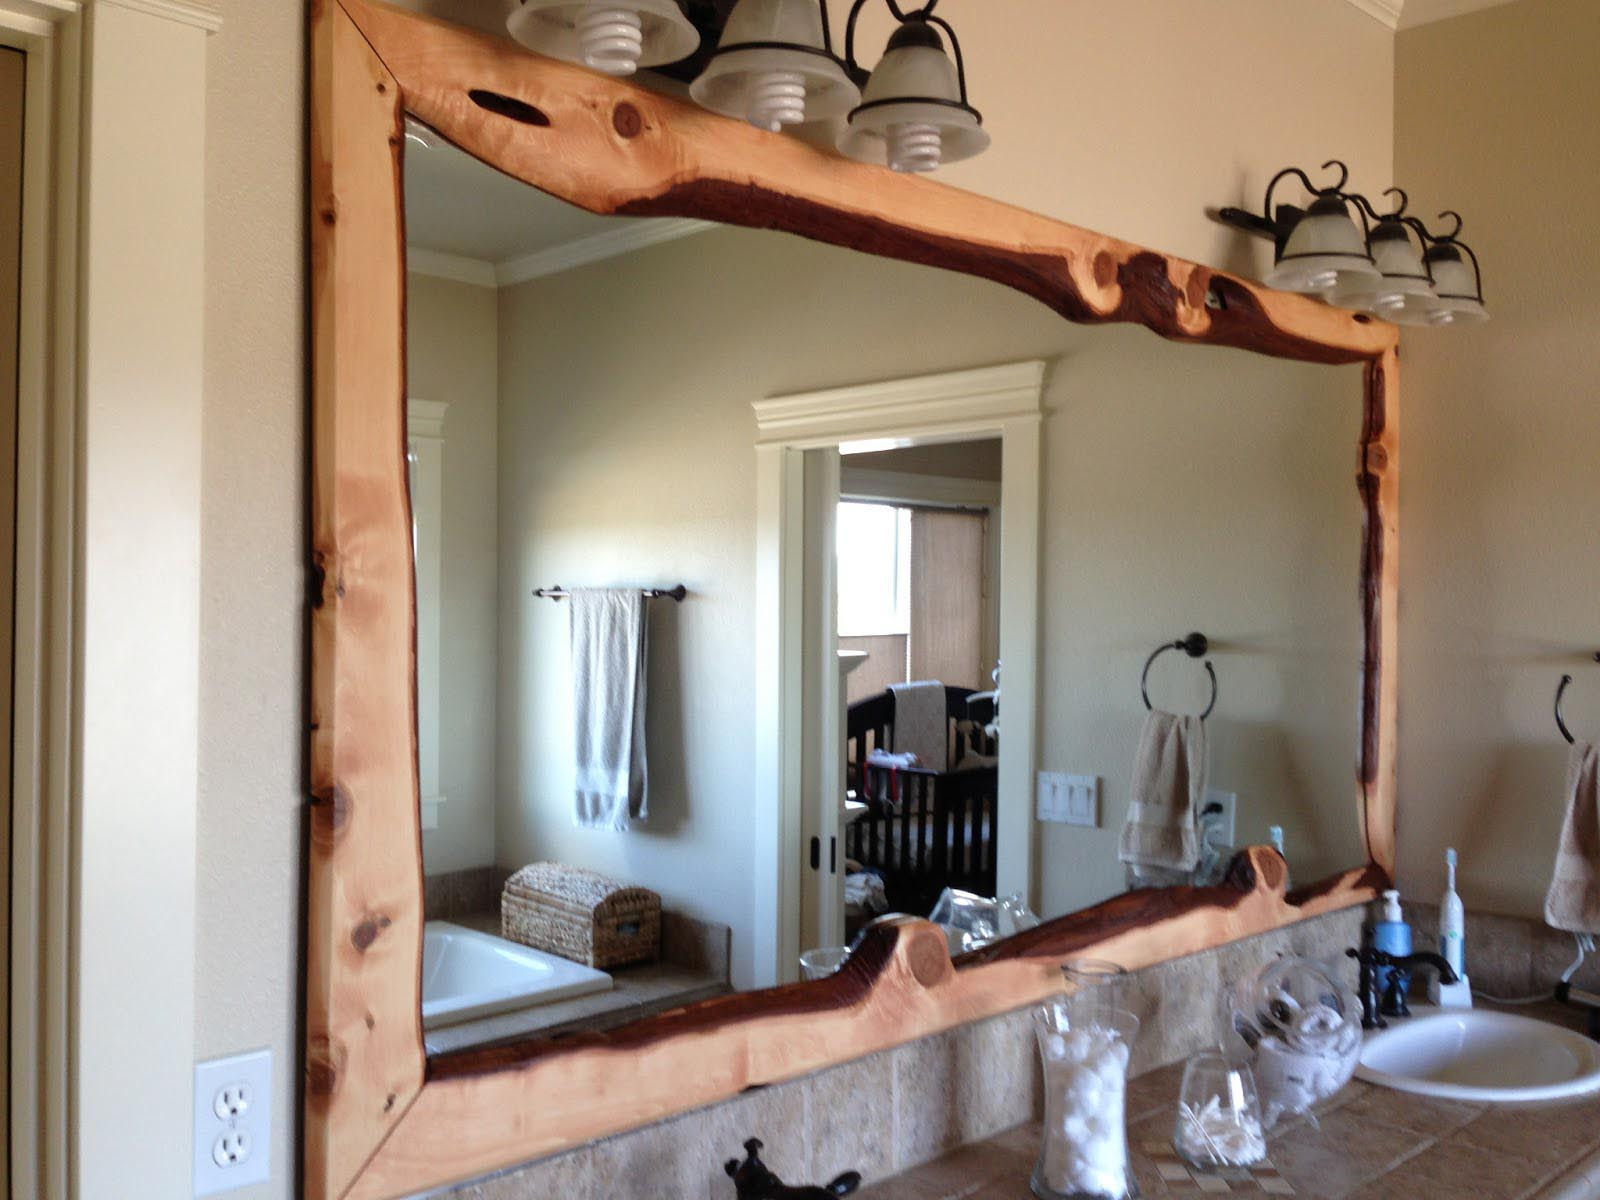 Bathroom Ideas Inspirational How To Frame A Bathroom Mirror With